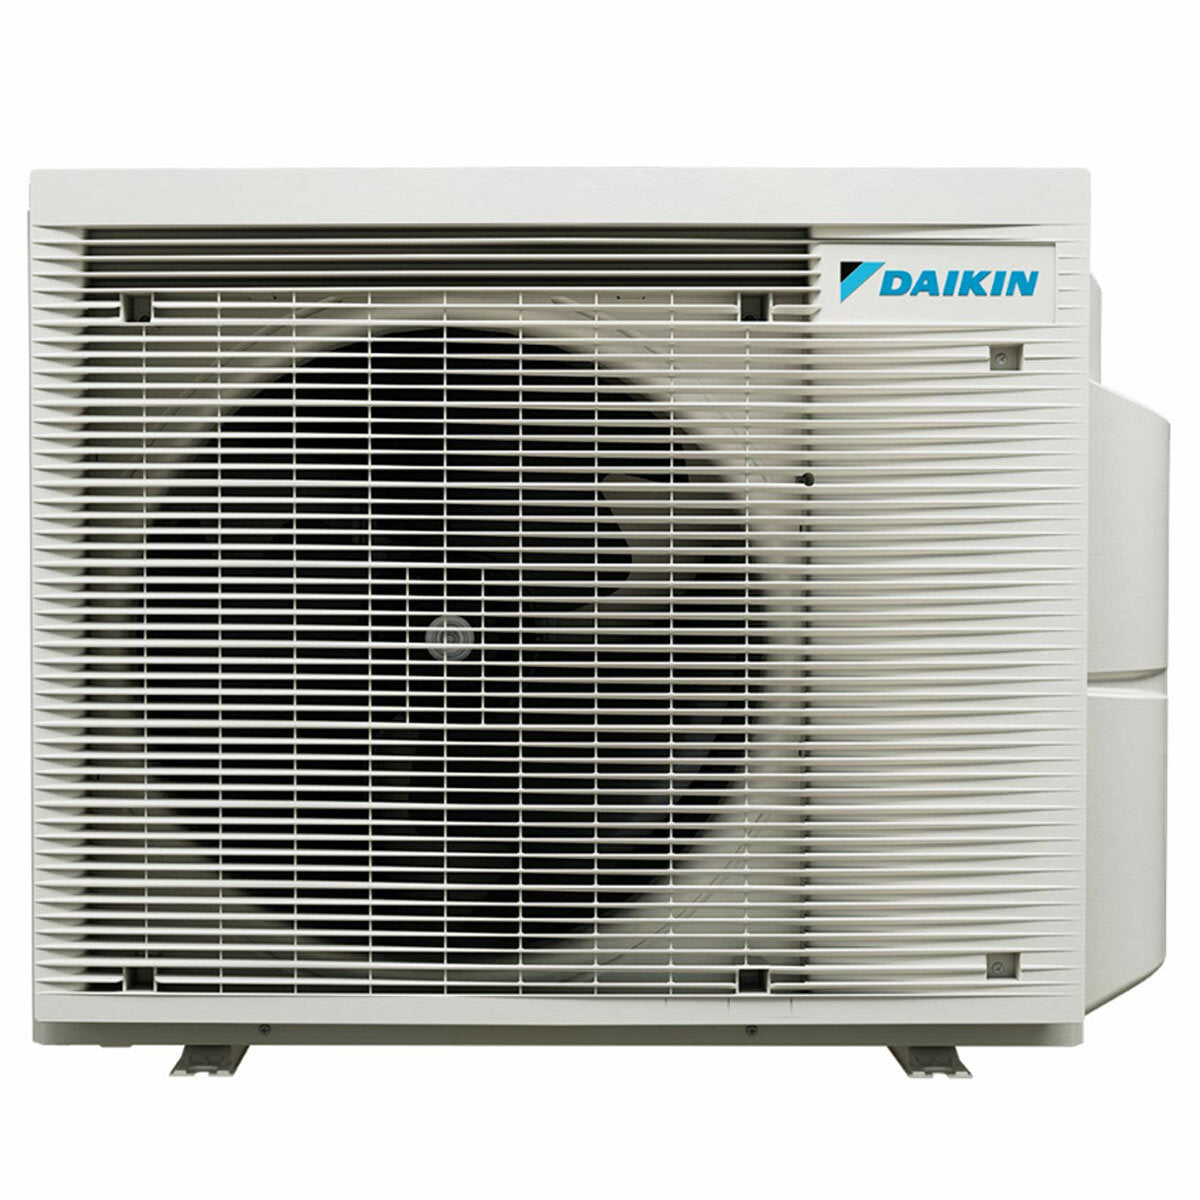 Daikin Stylish penta split 9000 + 9000 + 9000 + 9000 + 18000 BTU air conditioner A ++ wifi outdoor unit 9.0 kW